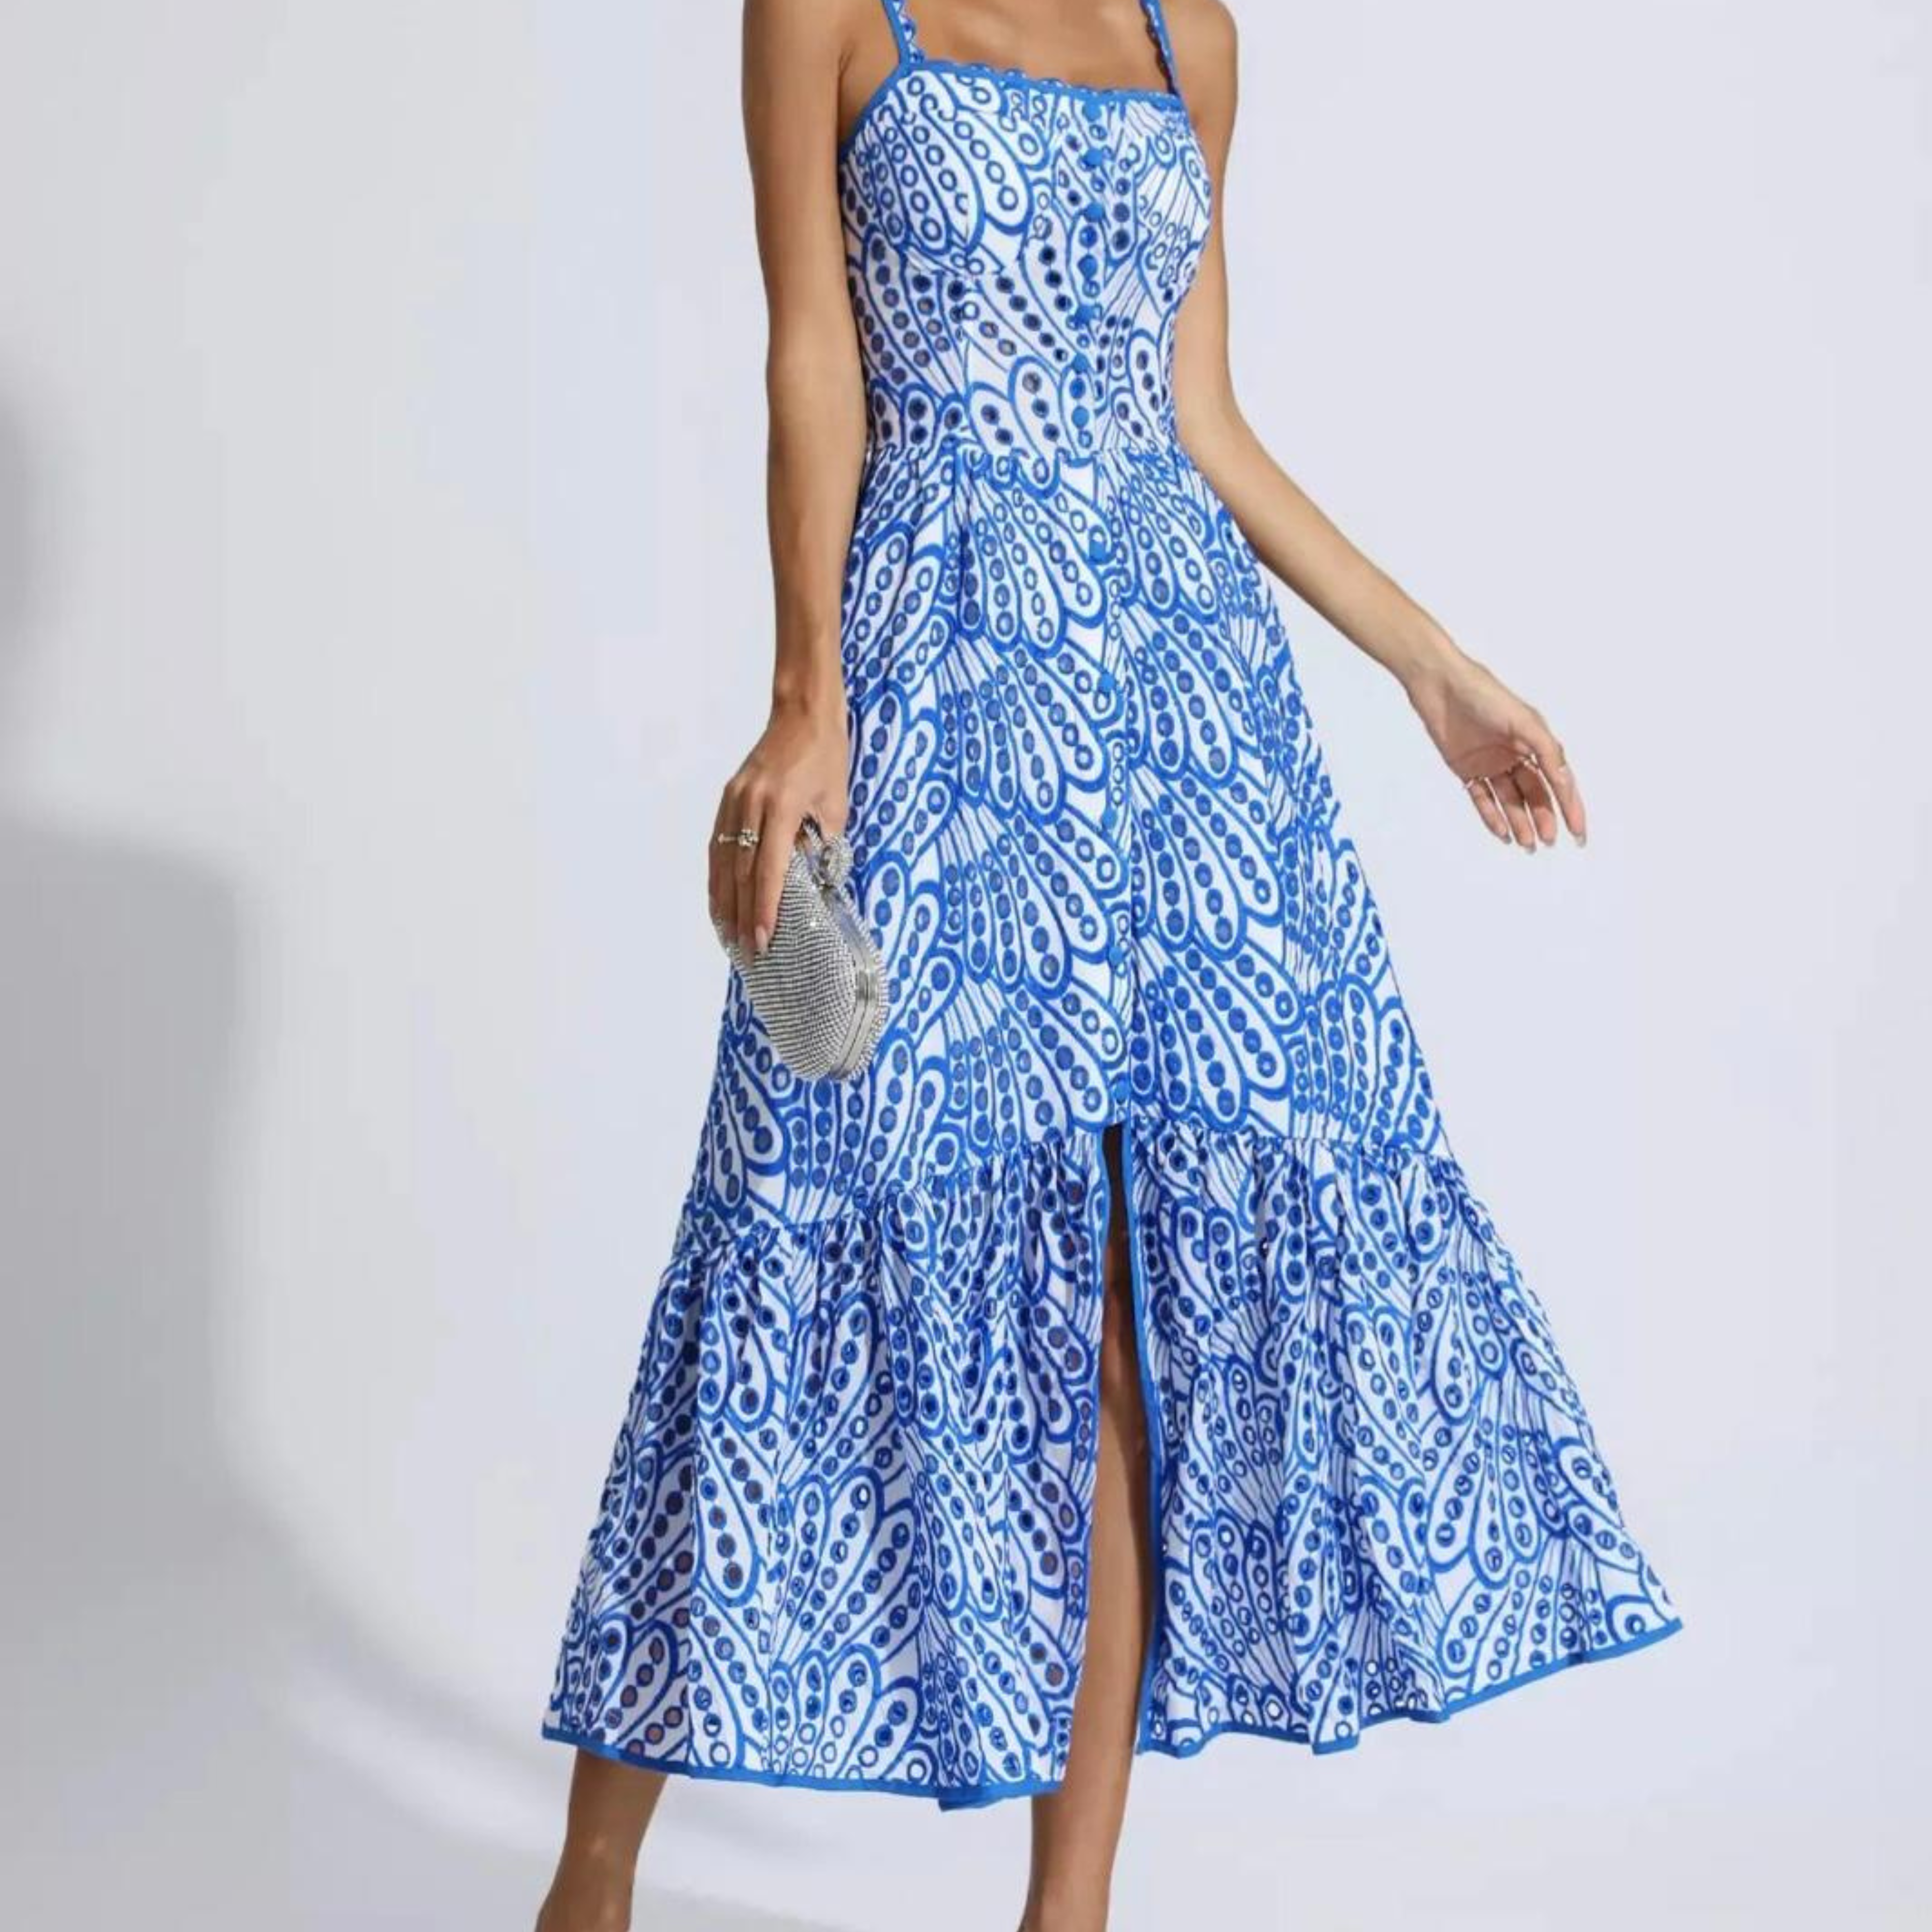 Suse Luxury Lace Beach Dress.